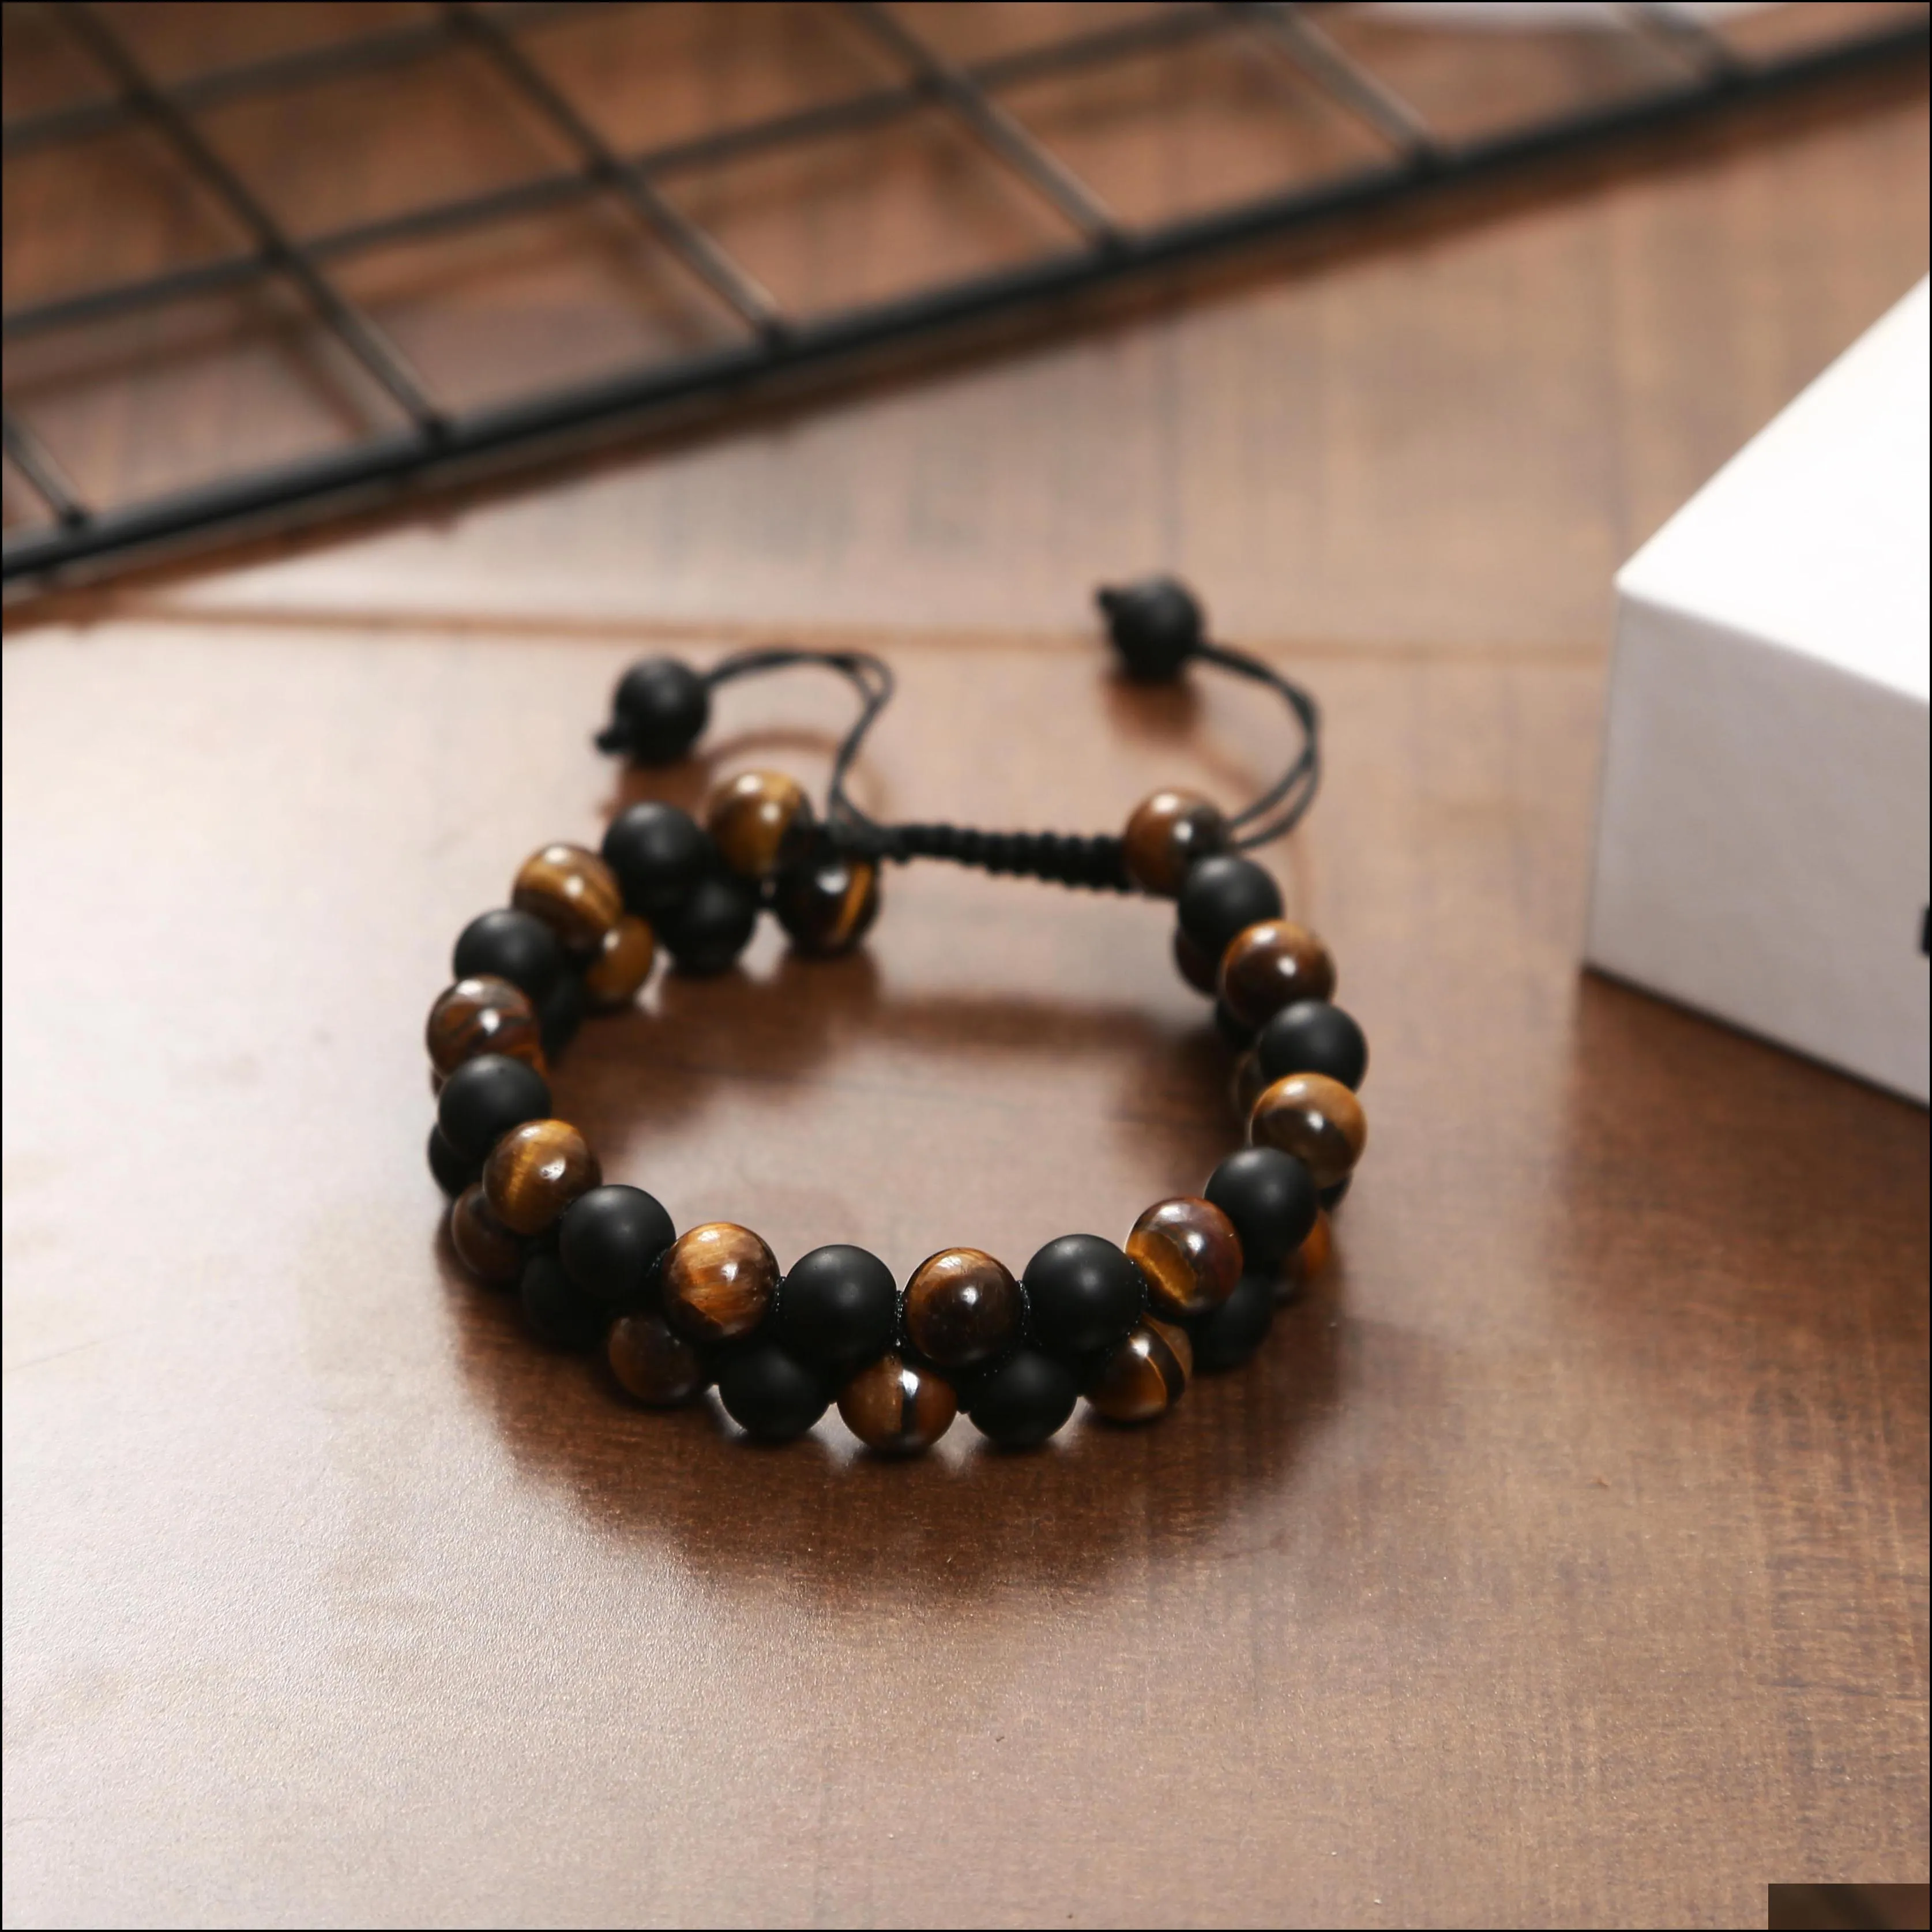  oil bracelet adjustable beads double rows lava rock bracelet perfume diffusion yoga birthday gift